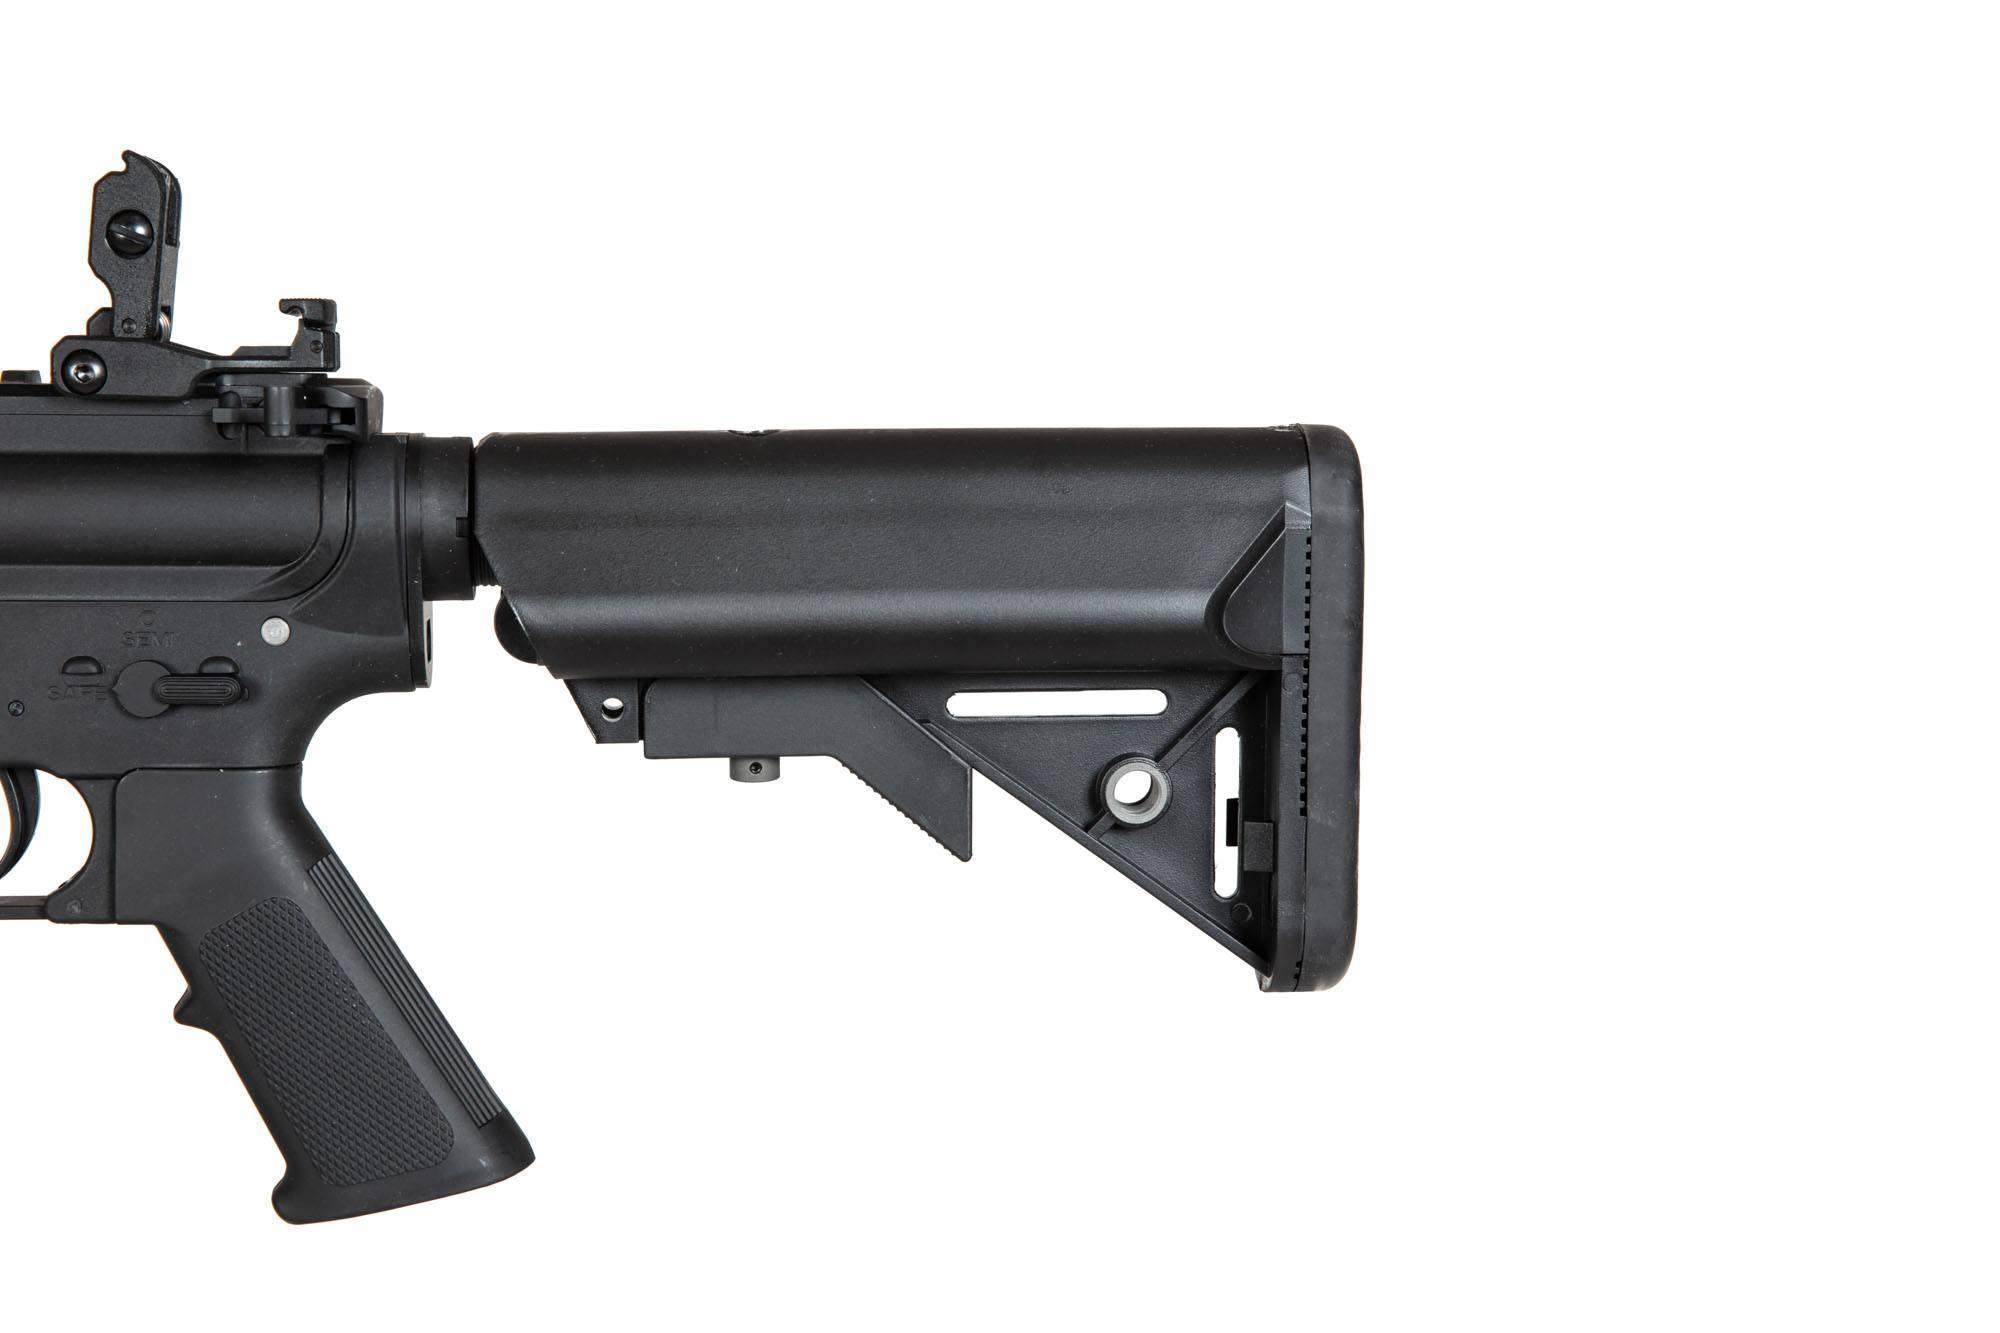 Specna Arms SA-C08 CORE sähköase - musta